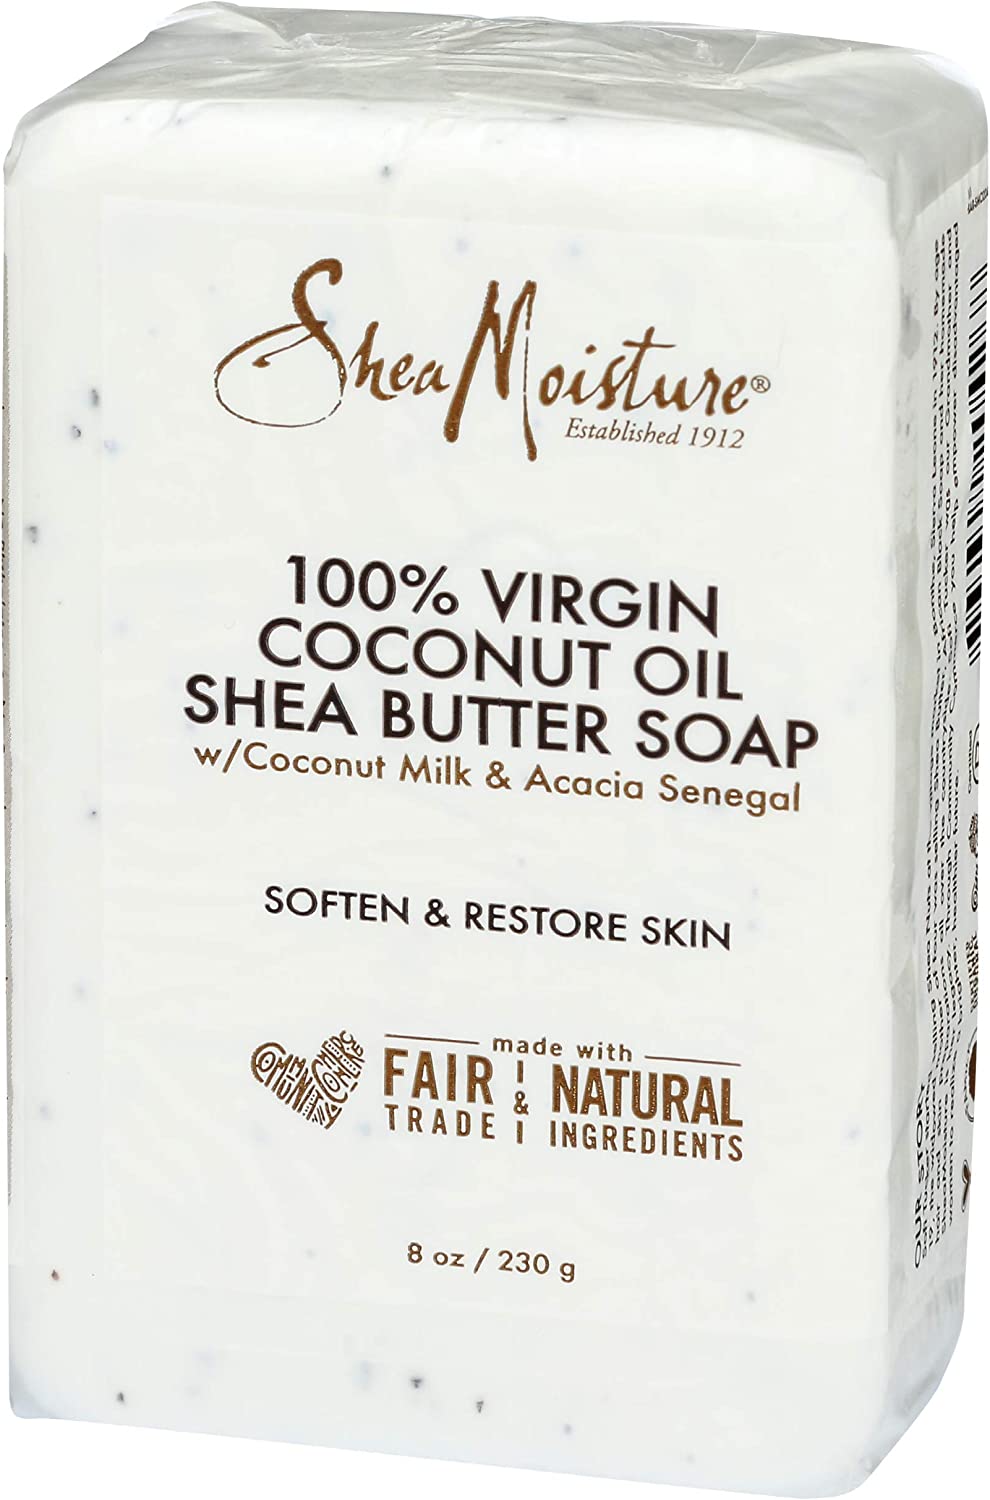 Shea Moisture Virgin Coconut Oil Bar Soap, 237g